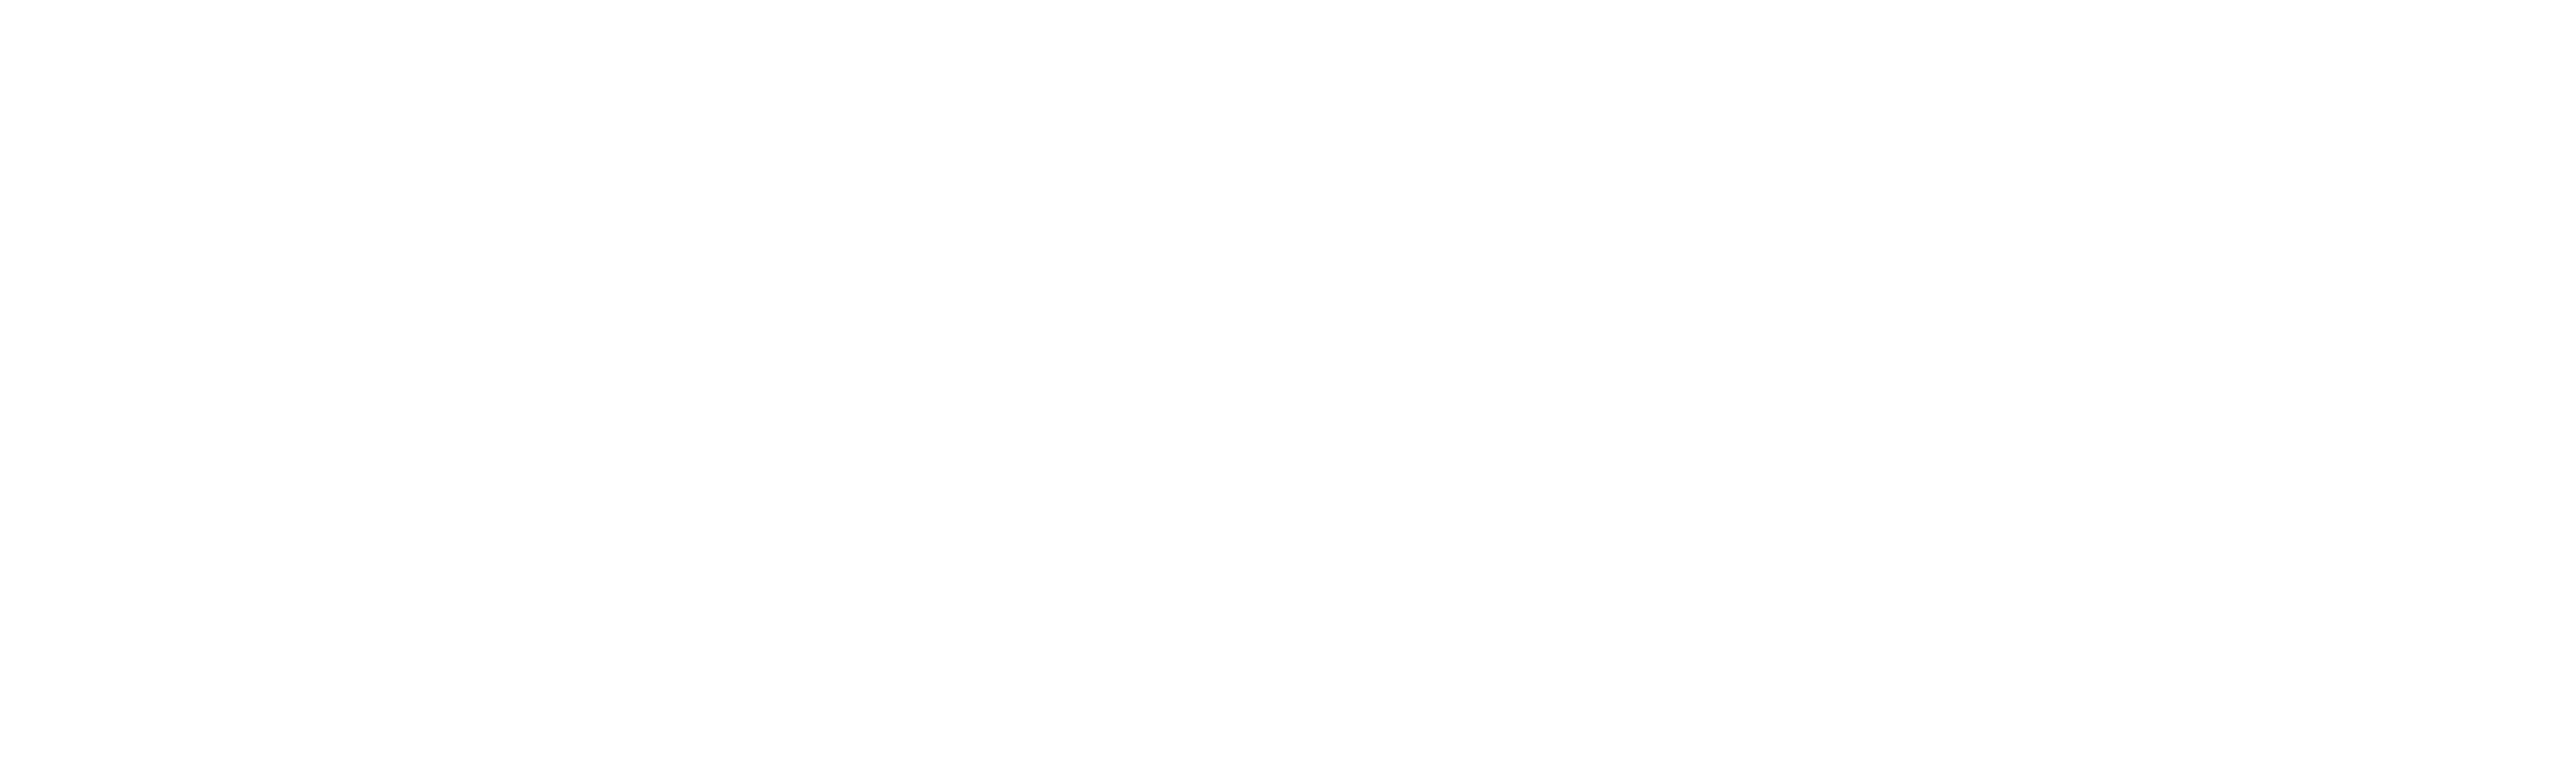 Capstone Insurance